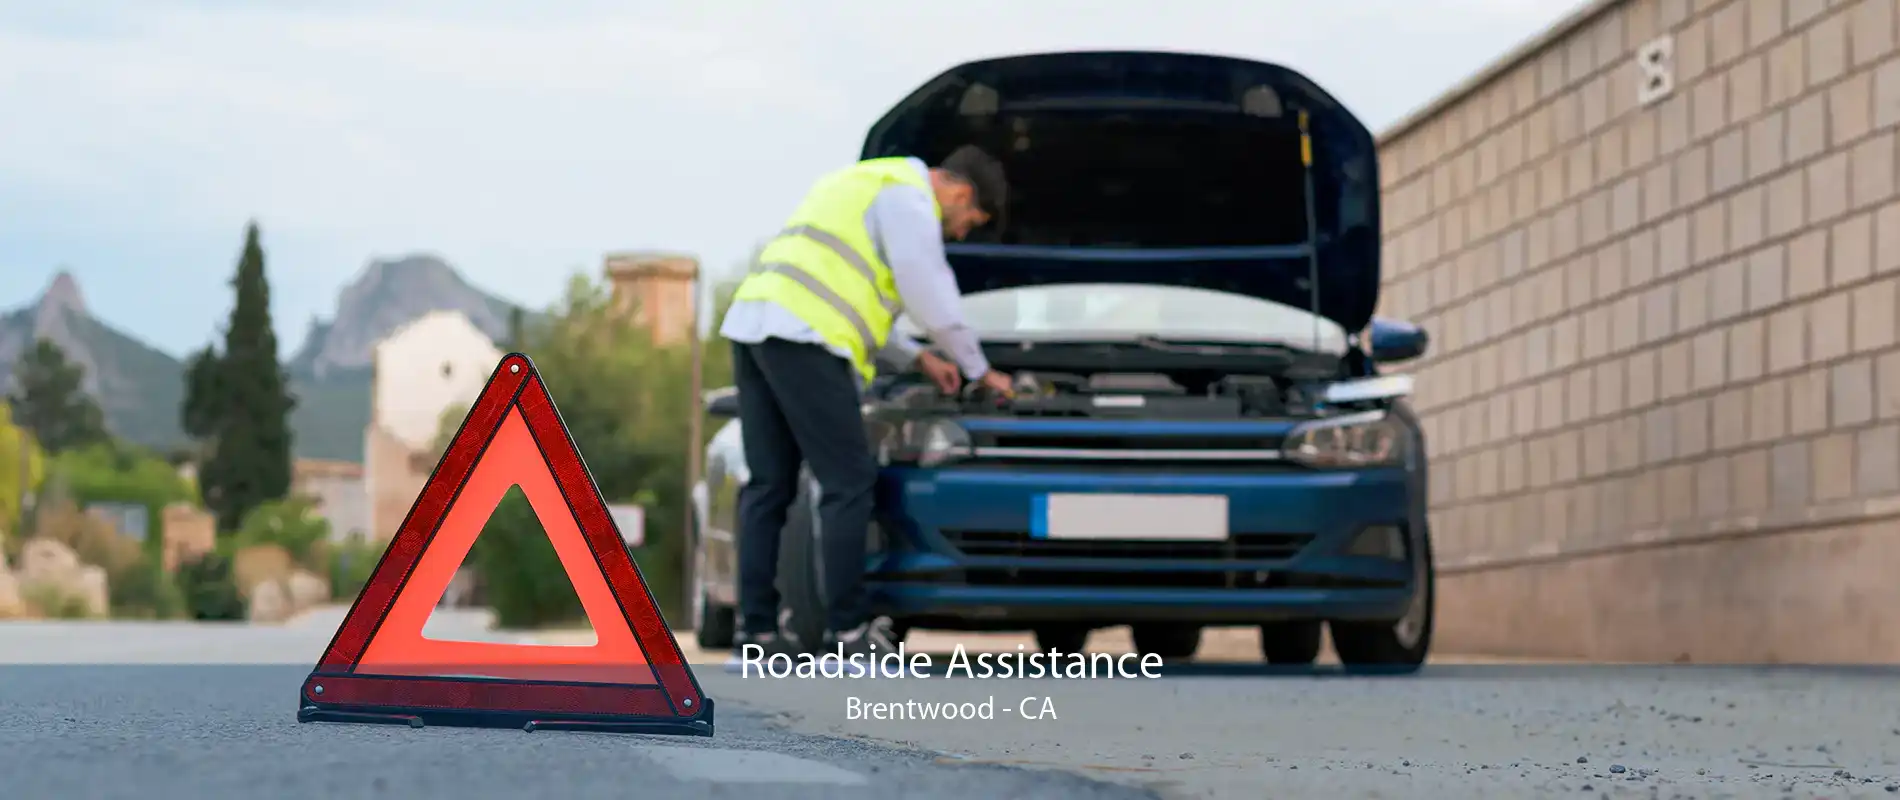 Roadside Assistance Brentwood - CA